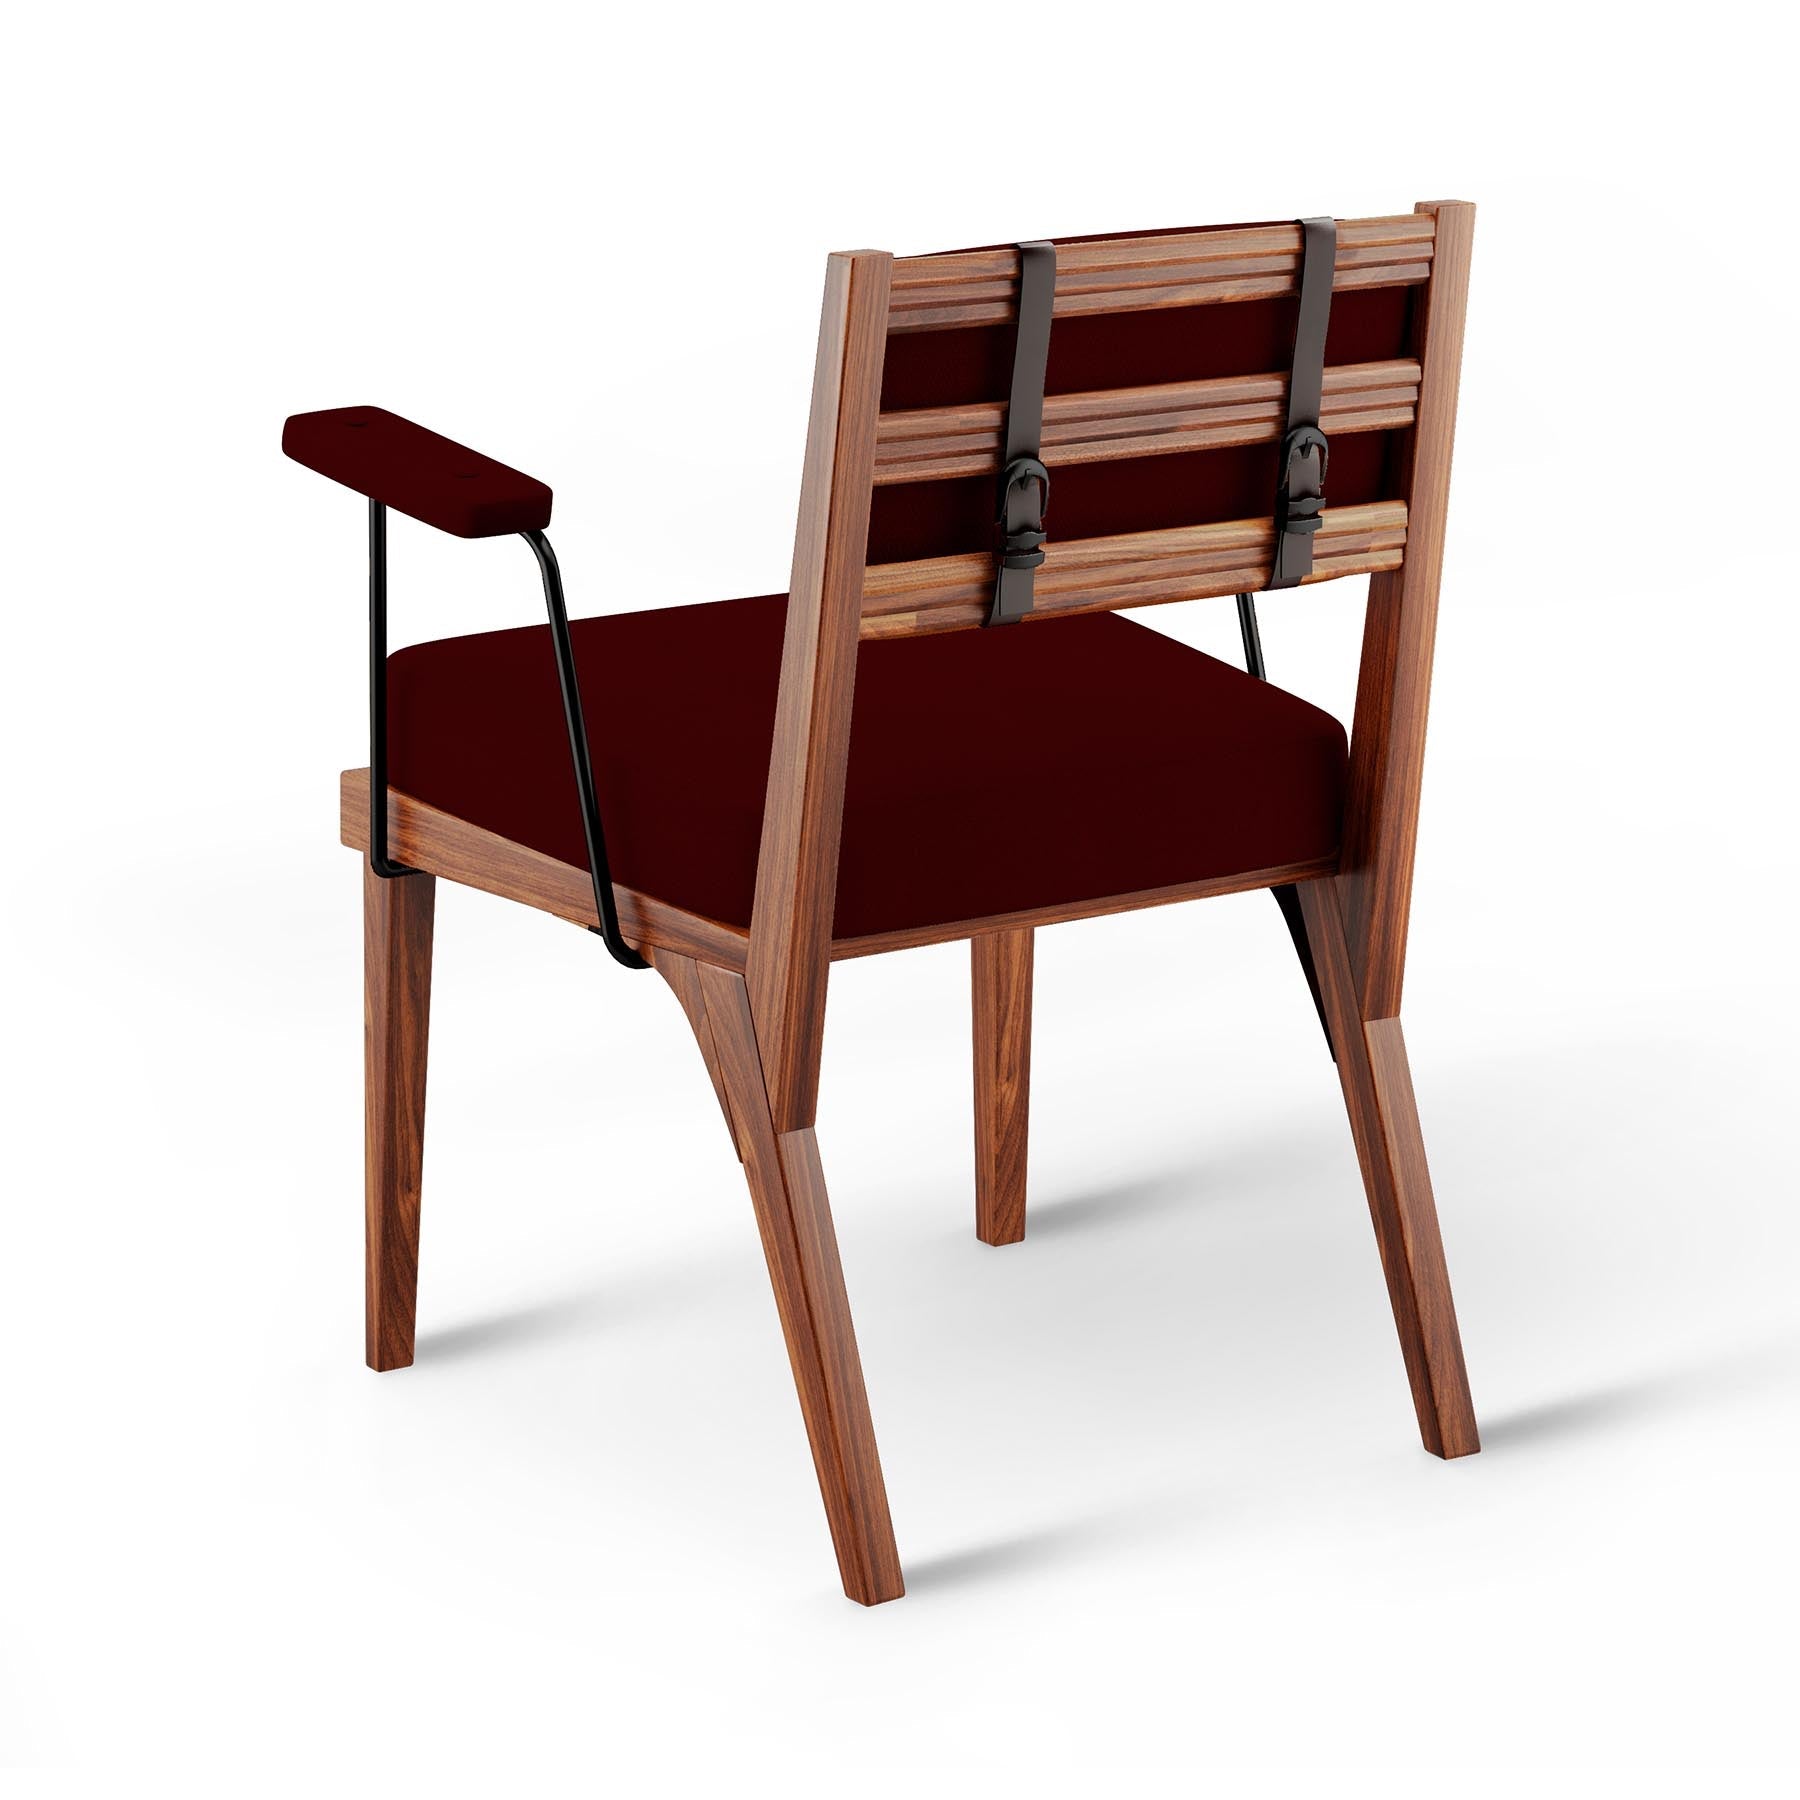 ROBINSON - CHAIR | Modern Furniture + Decor